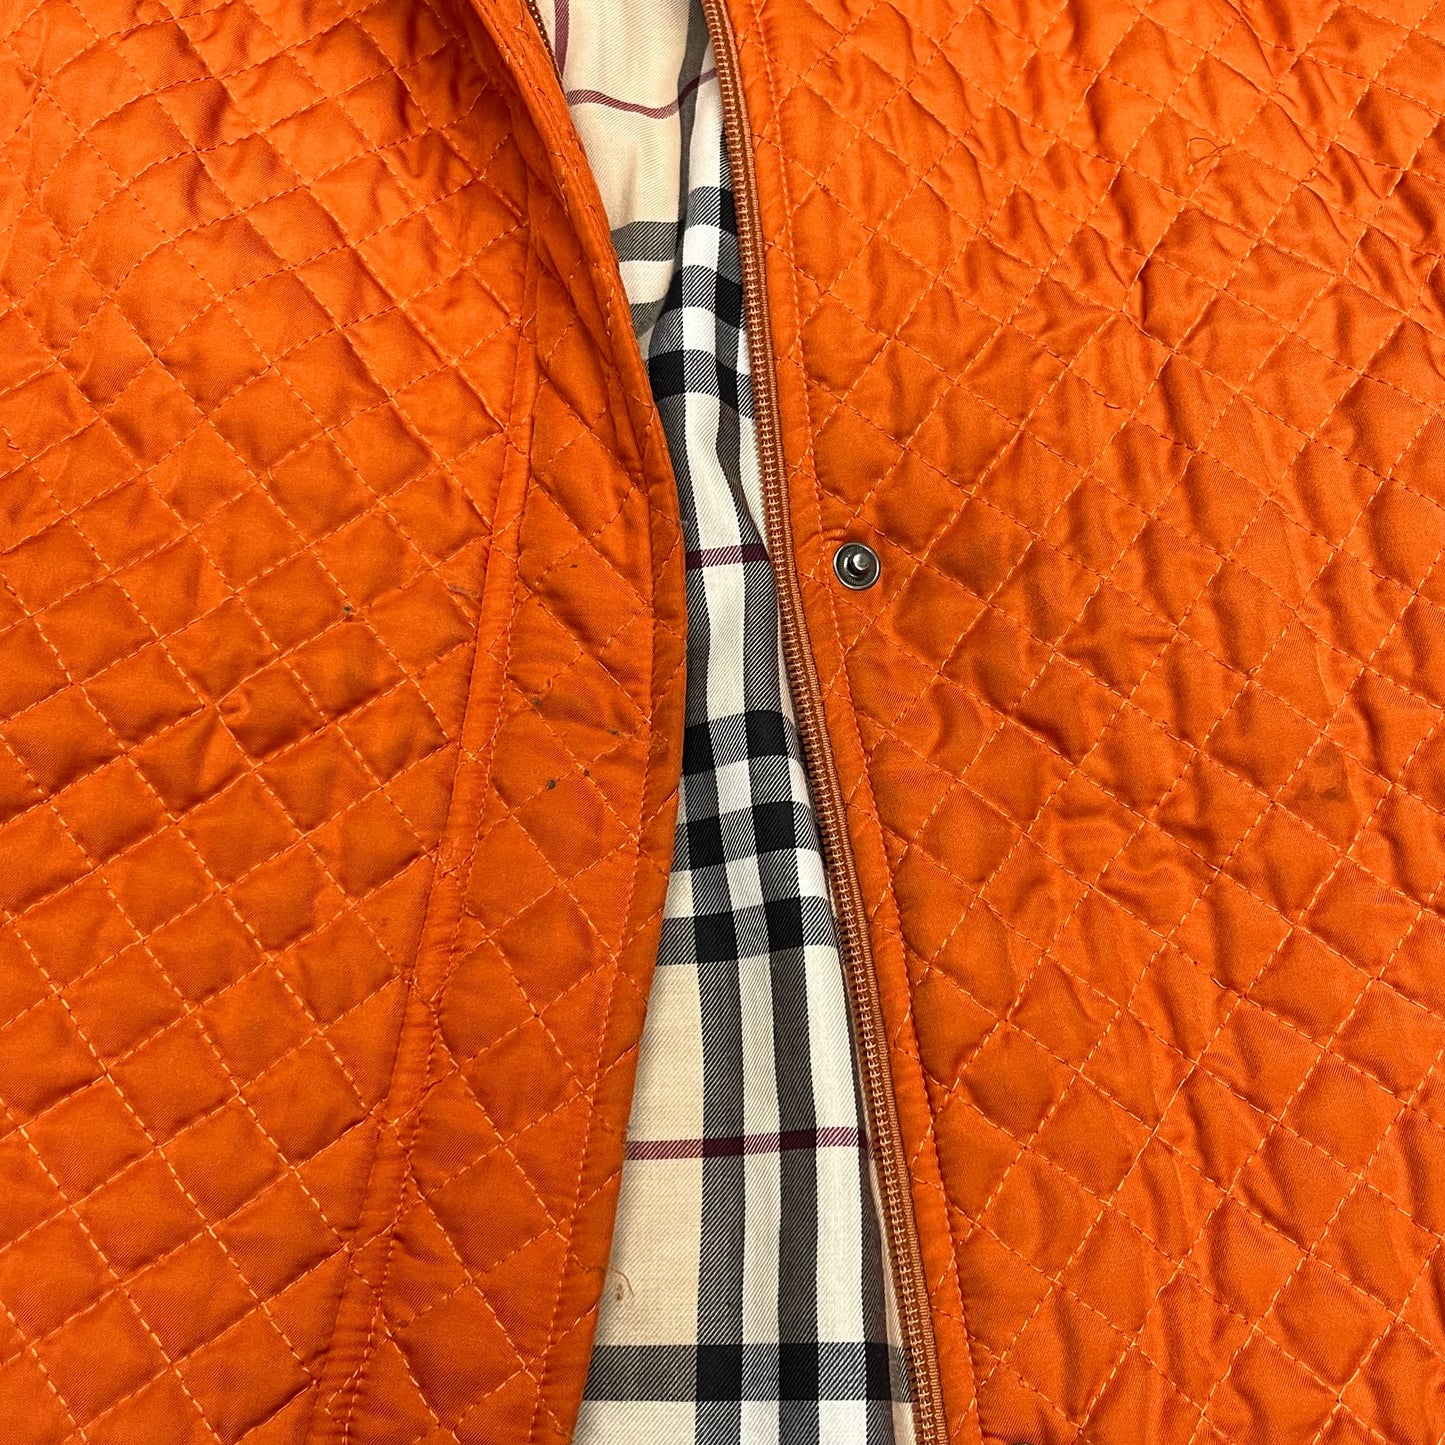 Orange Vest Luxury Designer By Burberry Size: L